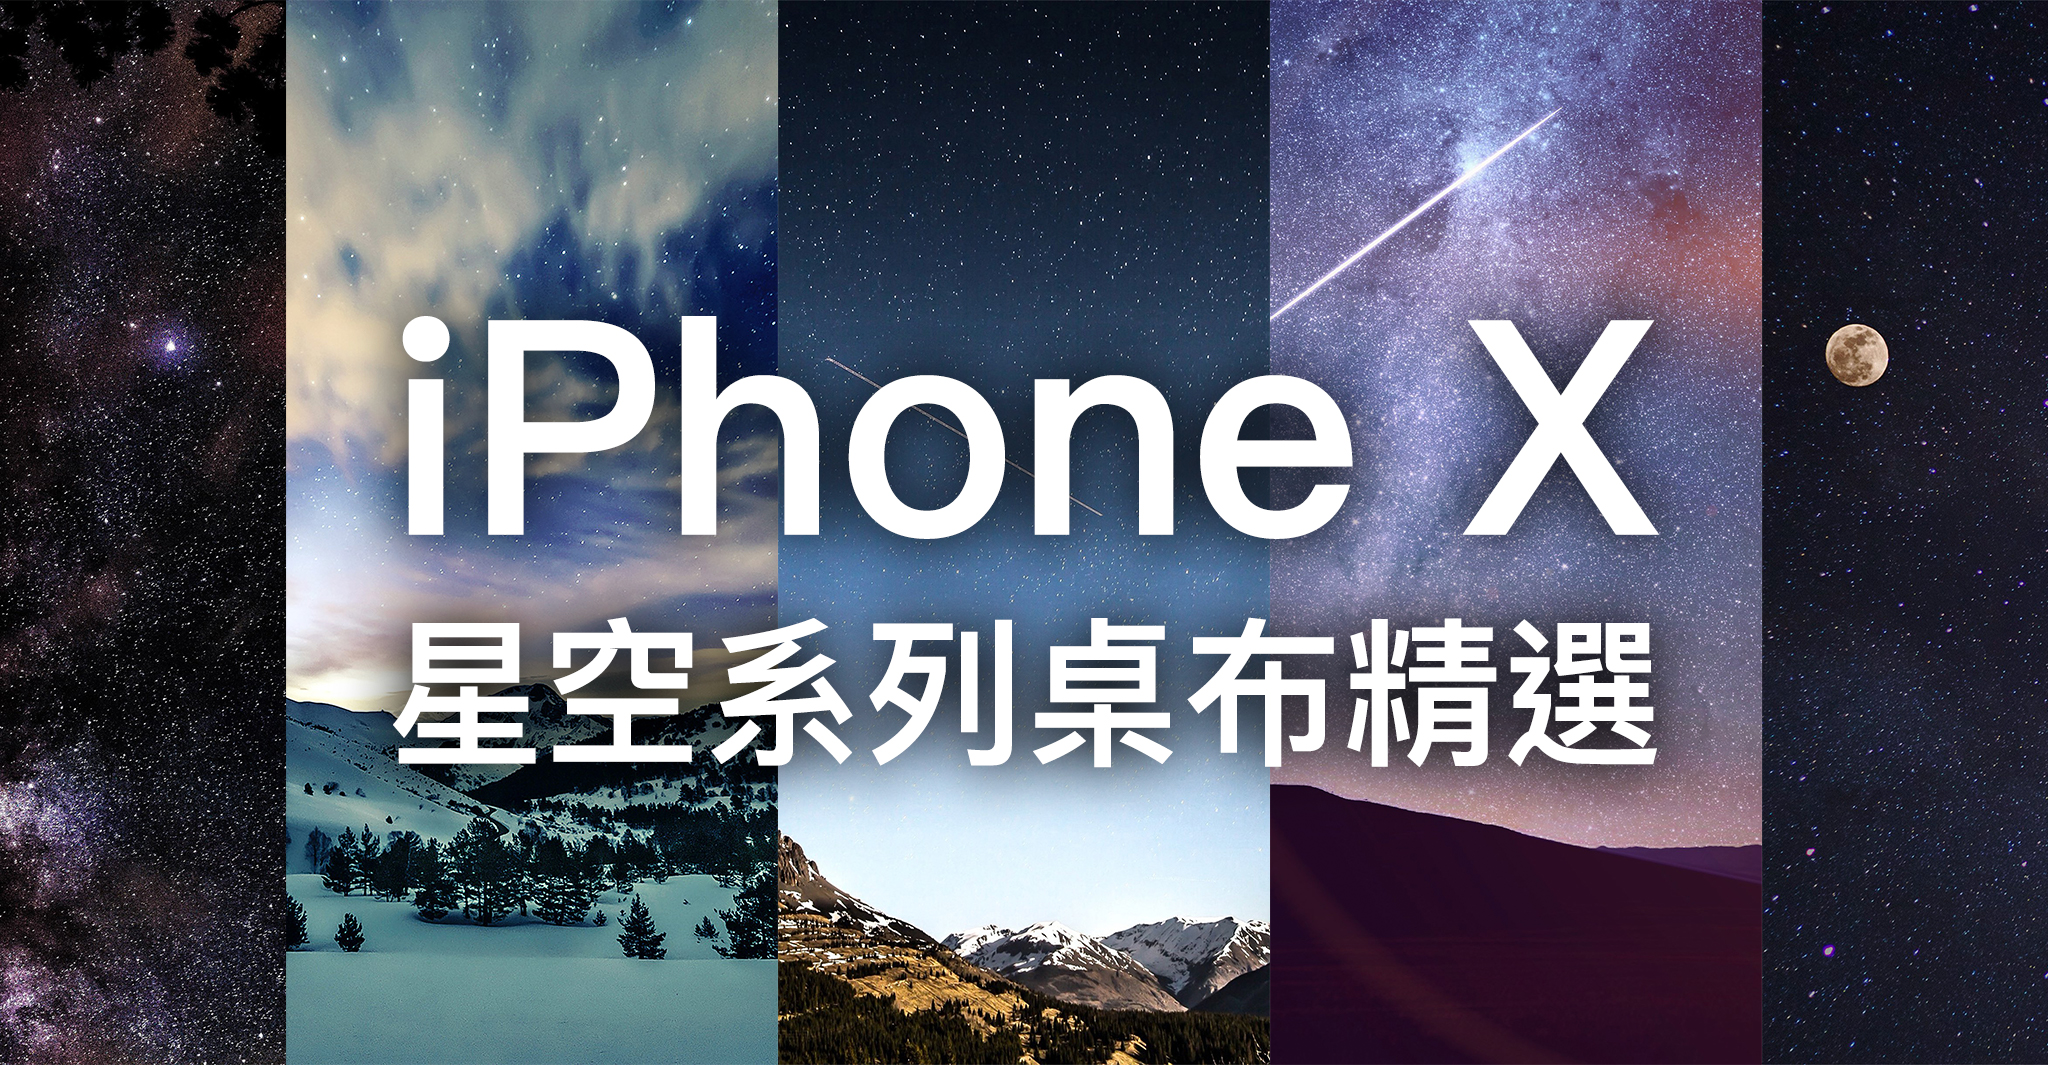 Iphone X 桌布下載 精選 張星空系列iphone X 桌布 蘋果仁 你的科技媒體